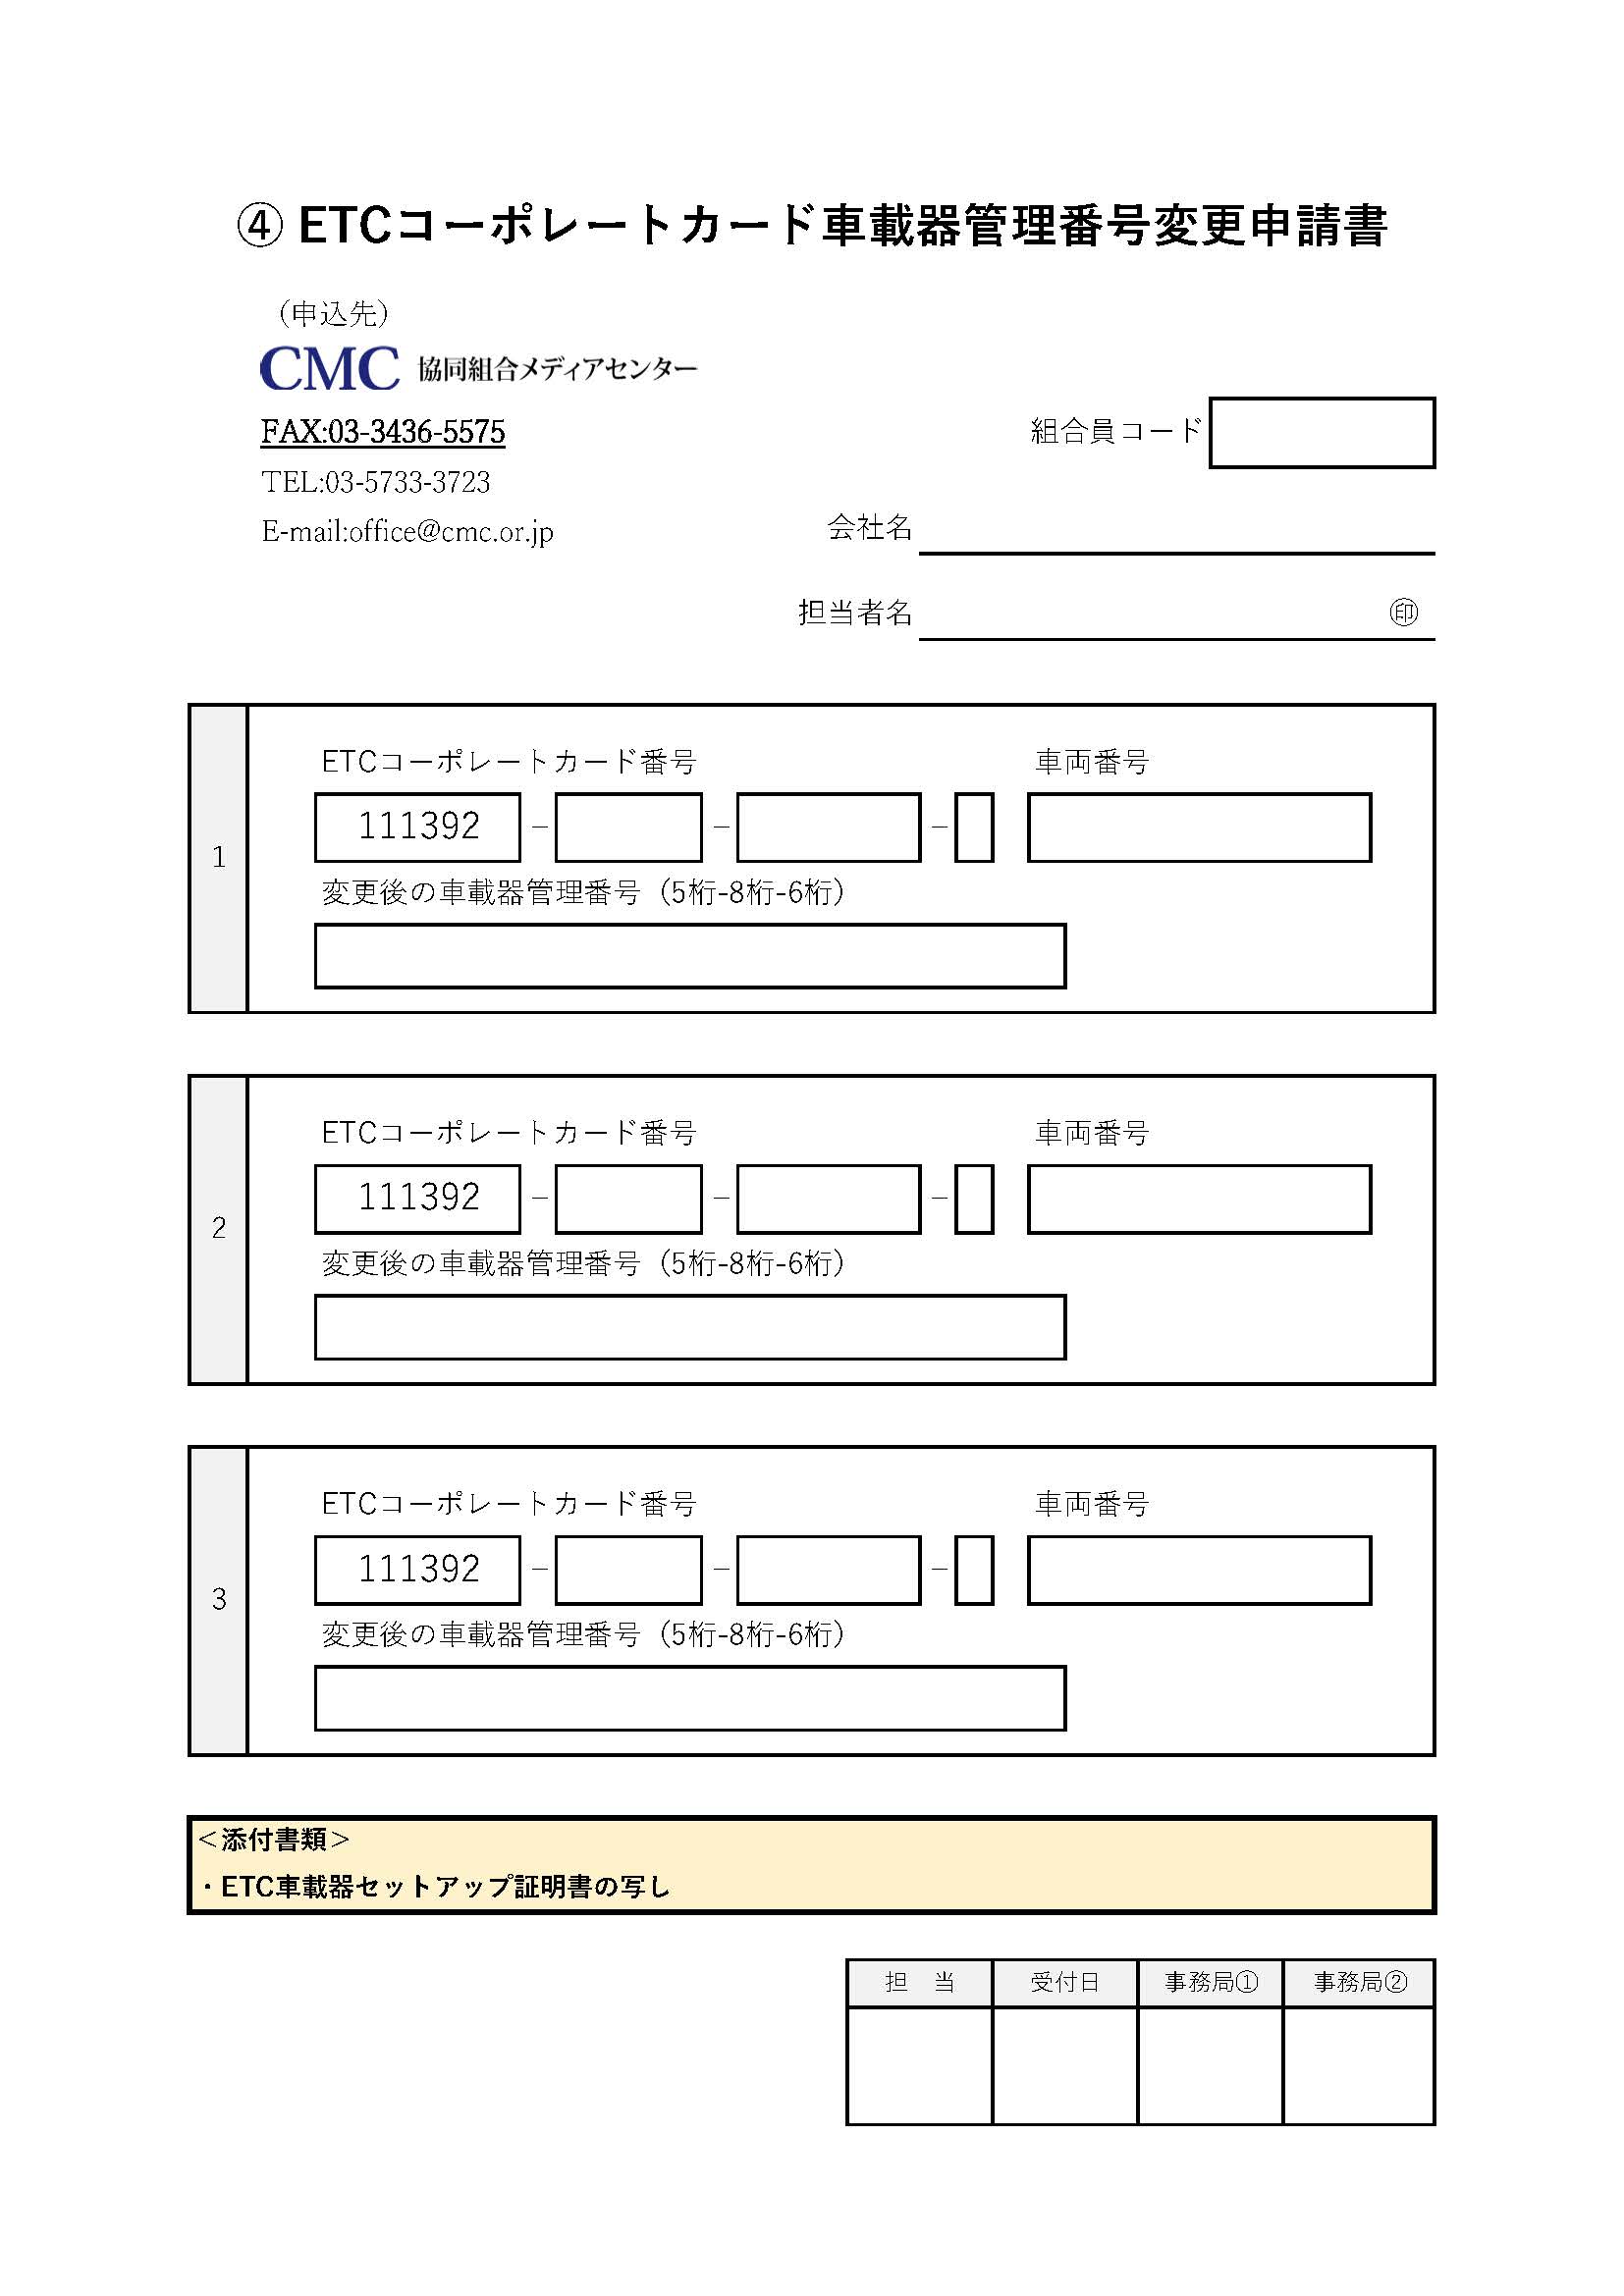 ETCコーポレートカード 車載器管理番号変更申請書